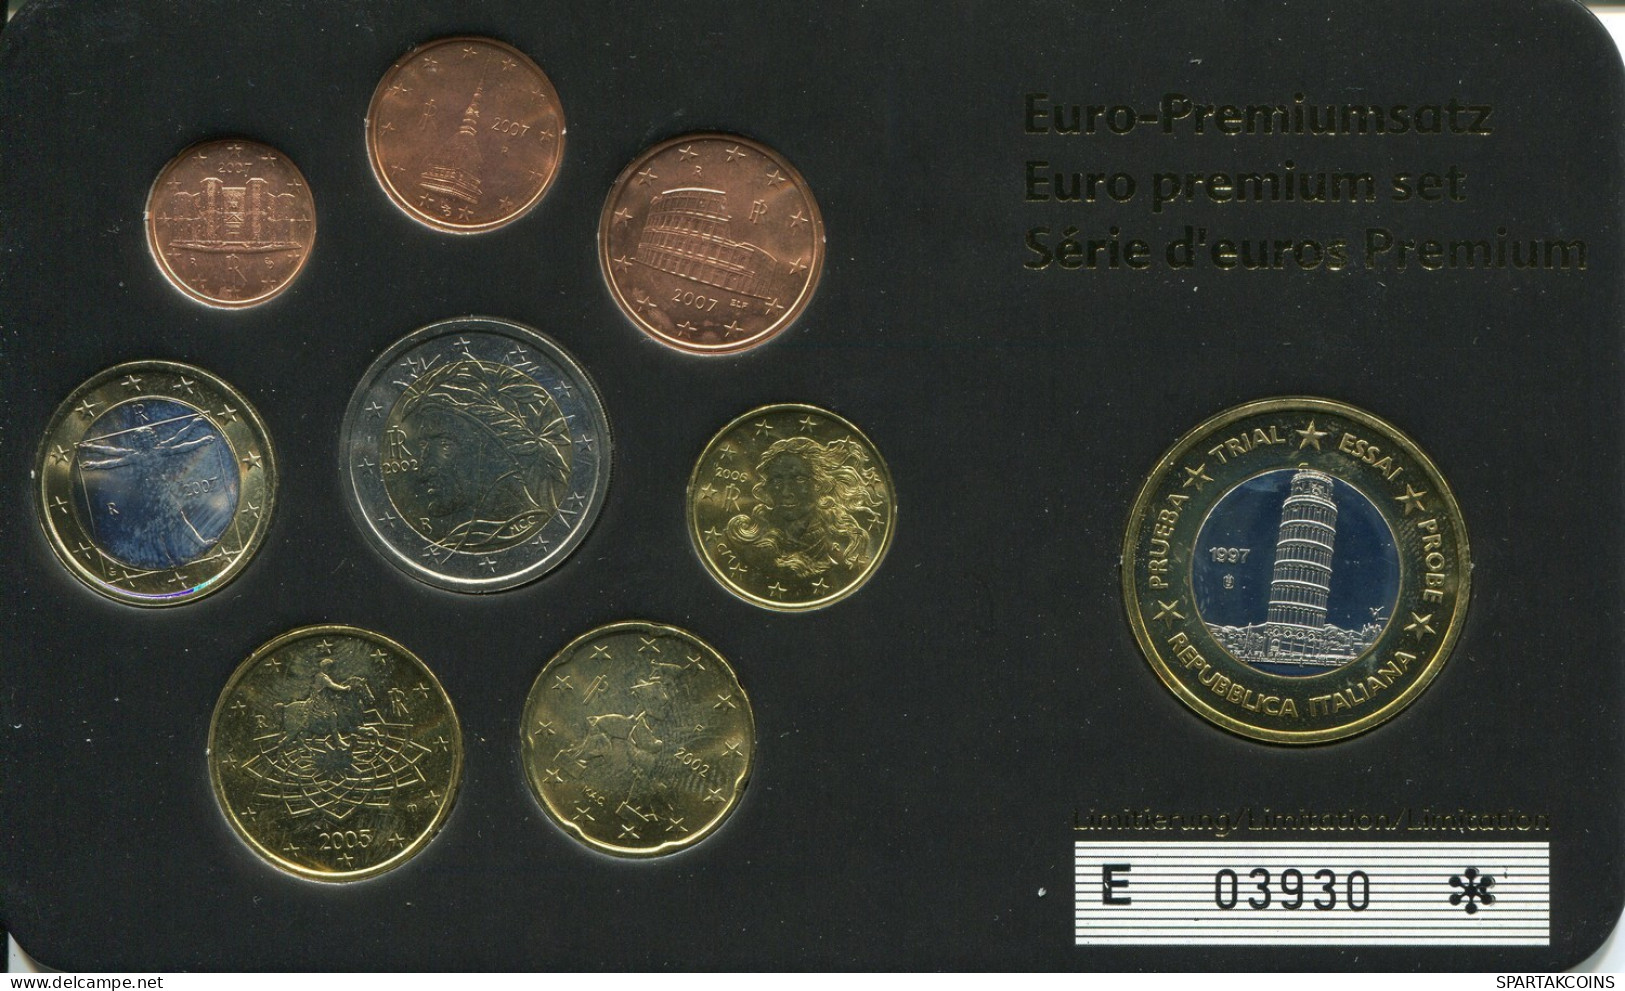 ITALIA ITALY 2002-2007 EURO SET + MEDAL UNC #SET1213.16.E.A - Italy